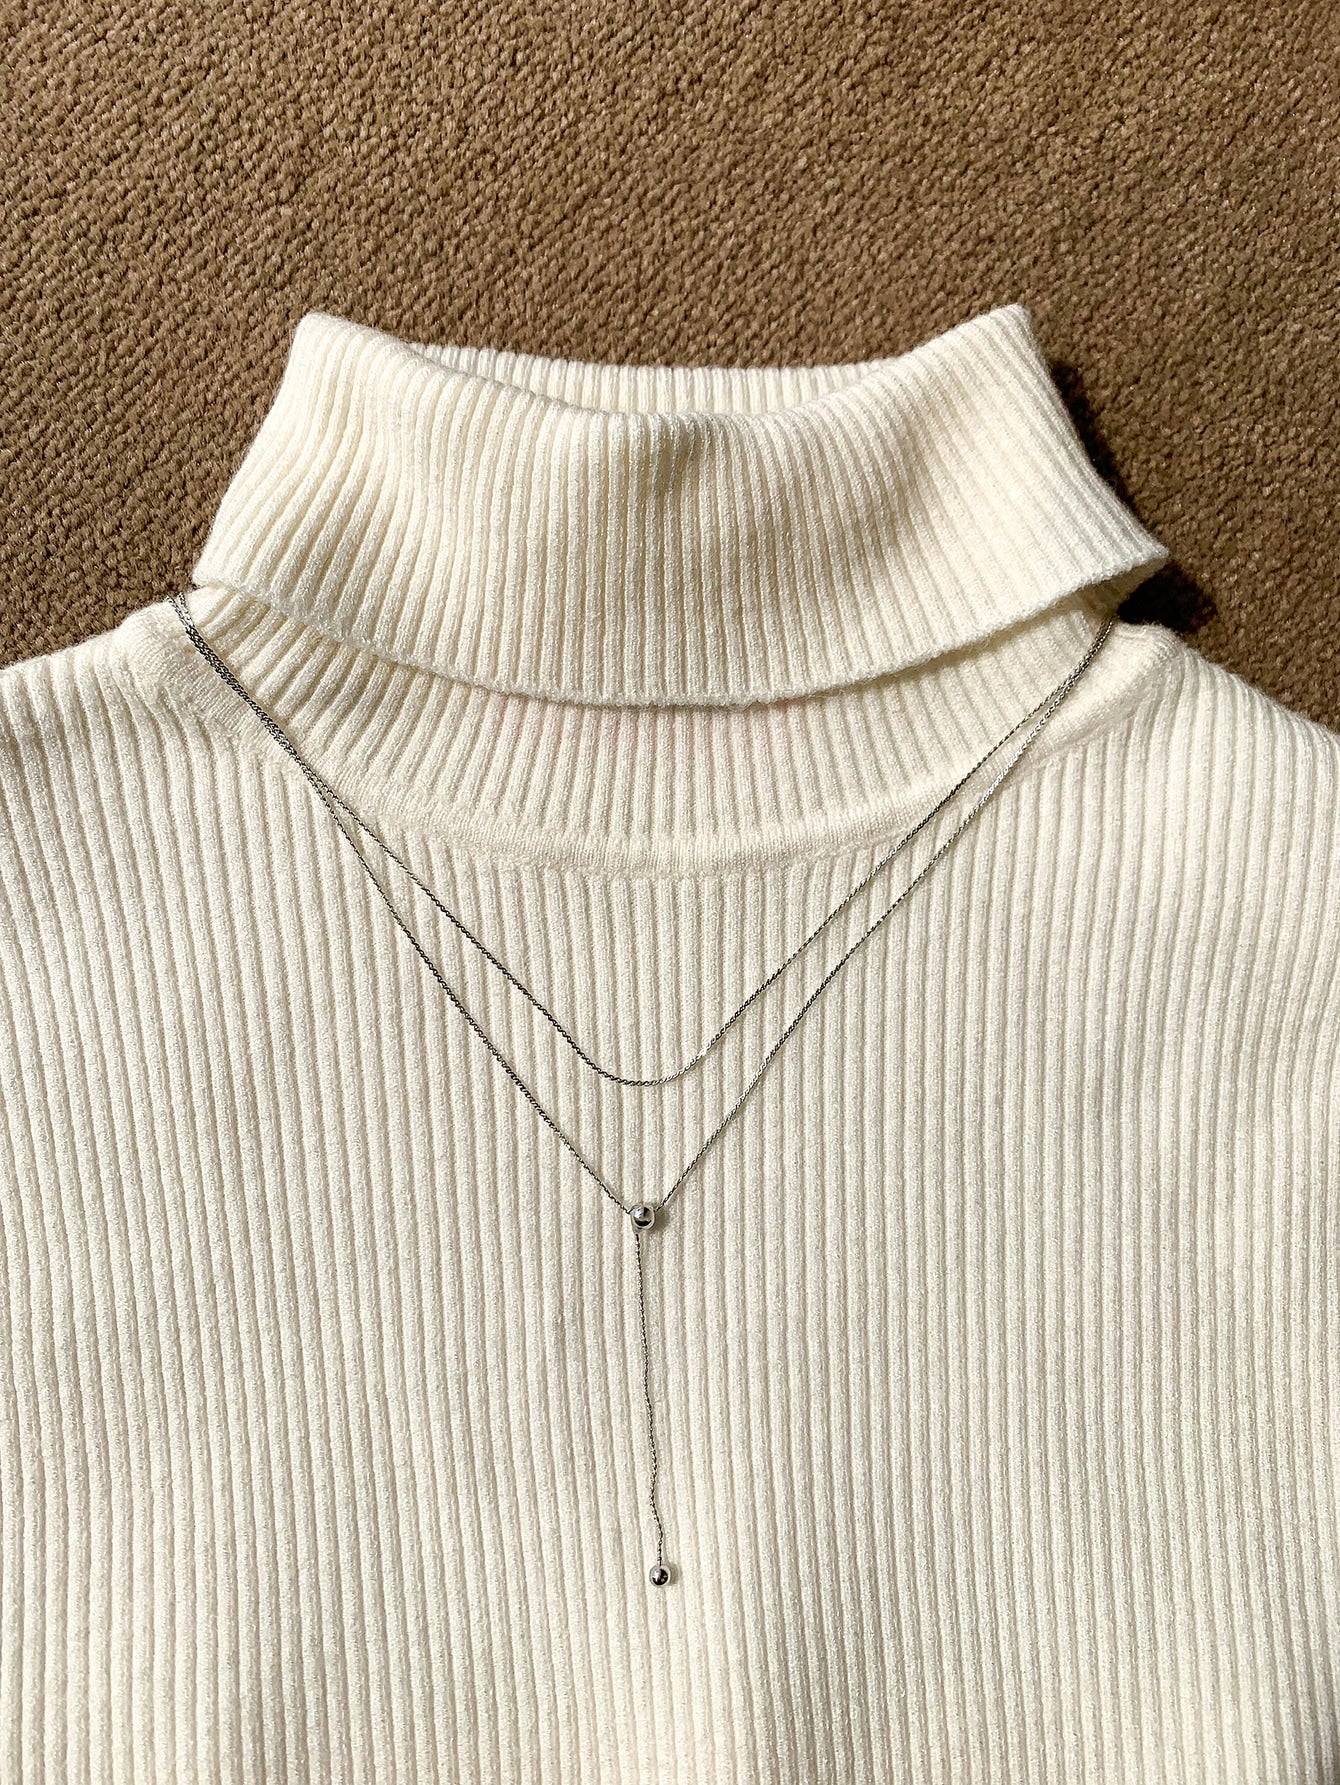 Bead Decor Layered Necklace